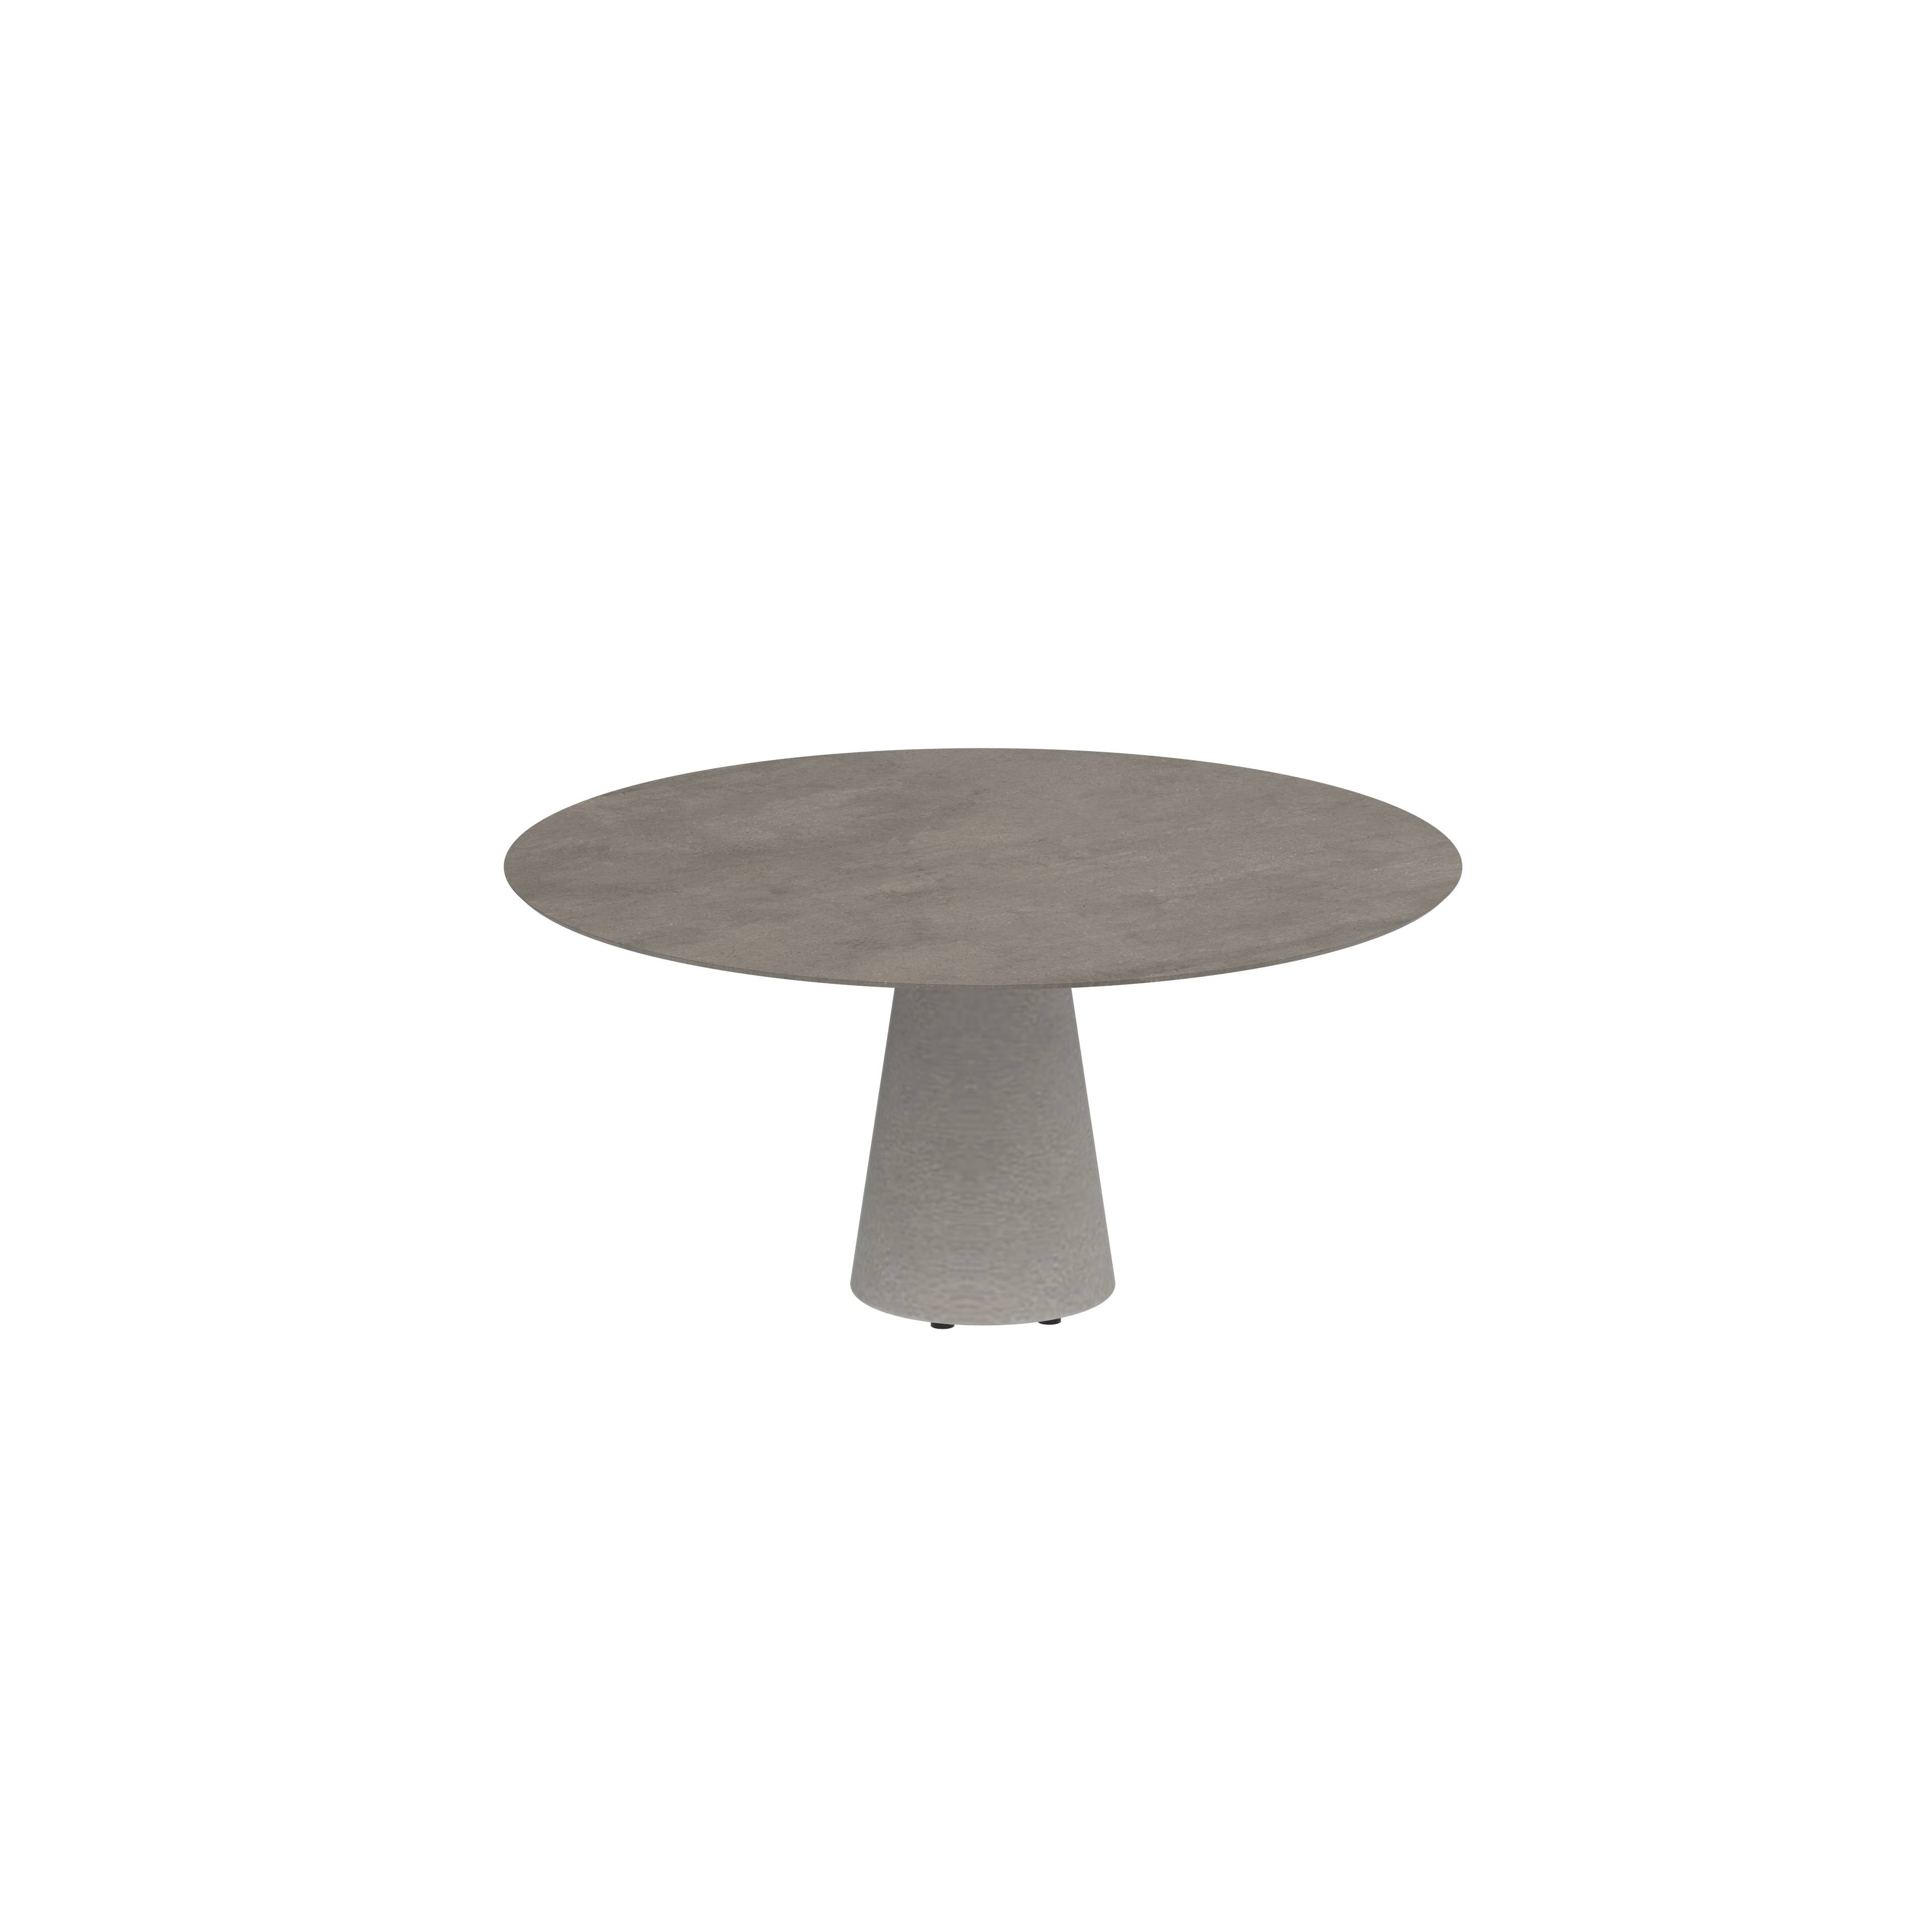 Conix Table Round Ø 160cm Legs Concrete Cement Grey - Tabletop Ceramic Terra Marrone